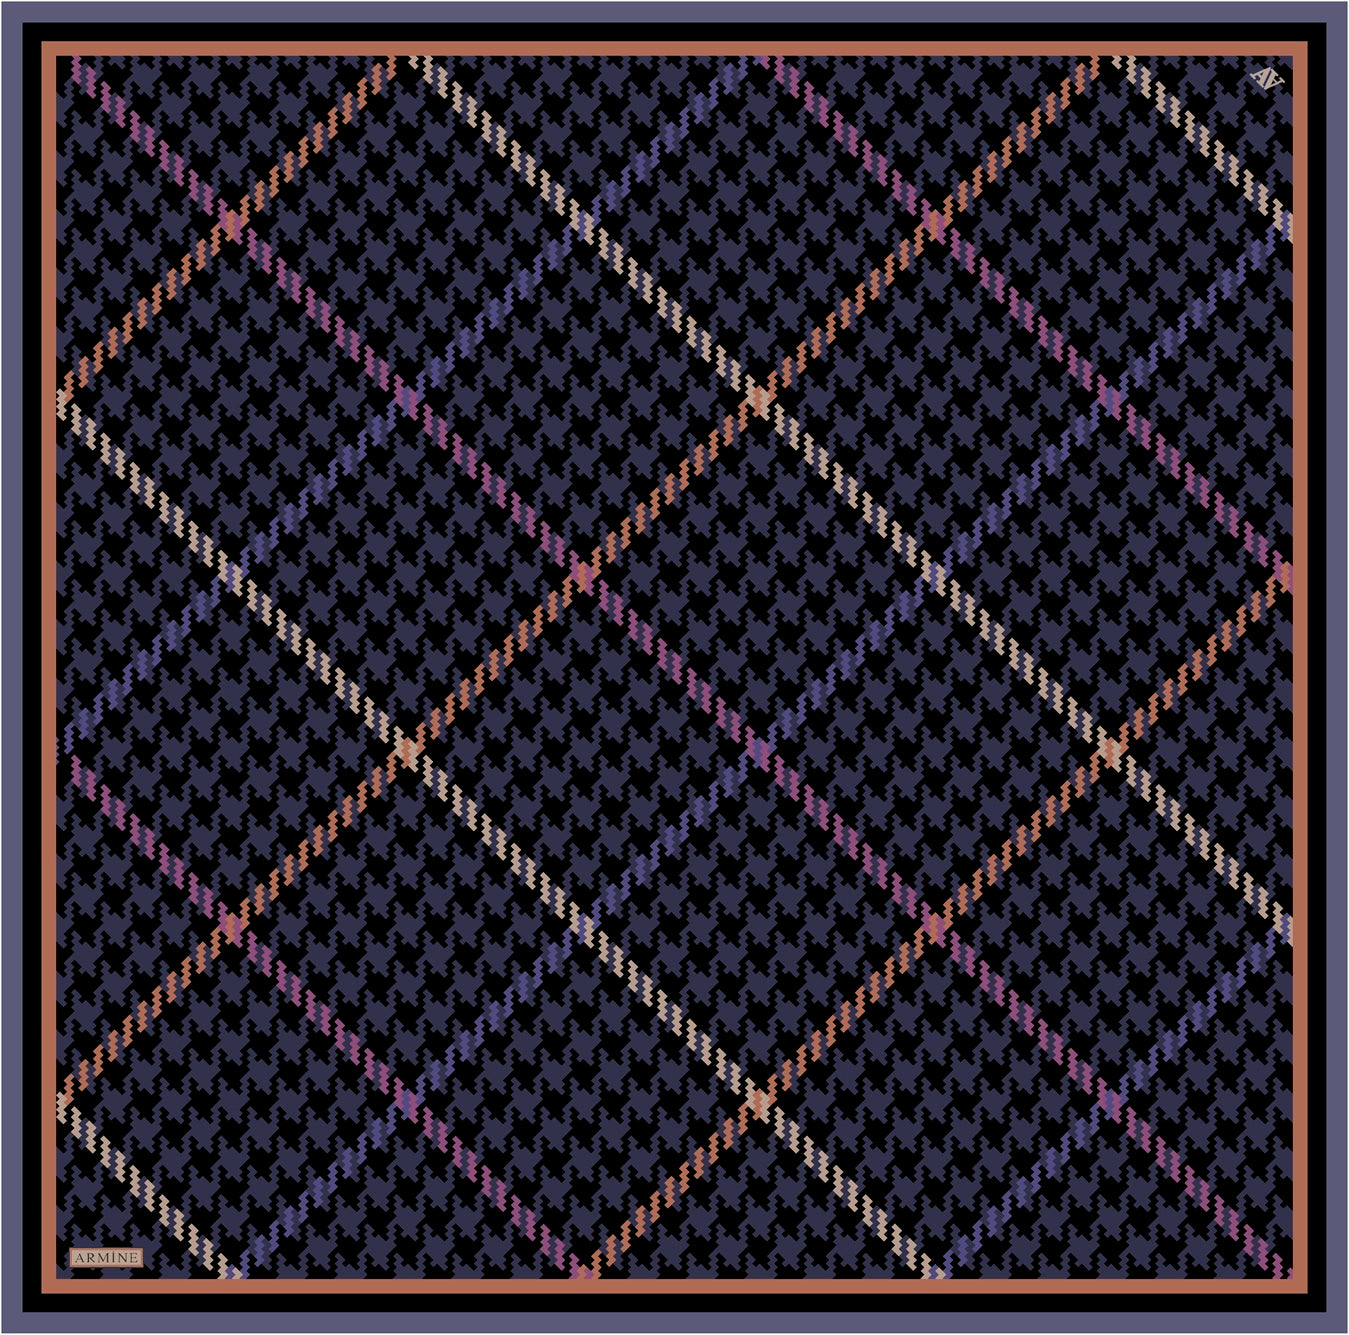 Louis Vuitton Wallpaper Silk Scarf